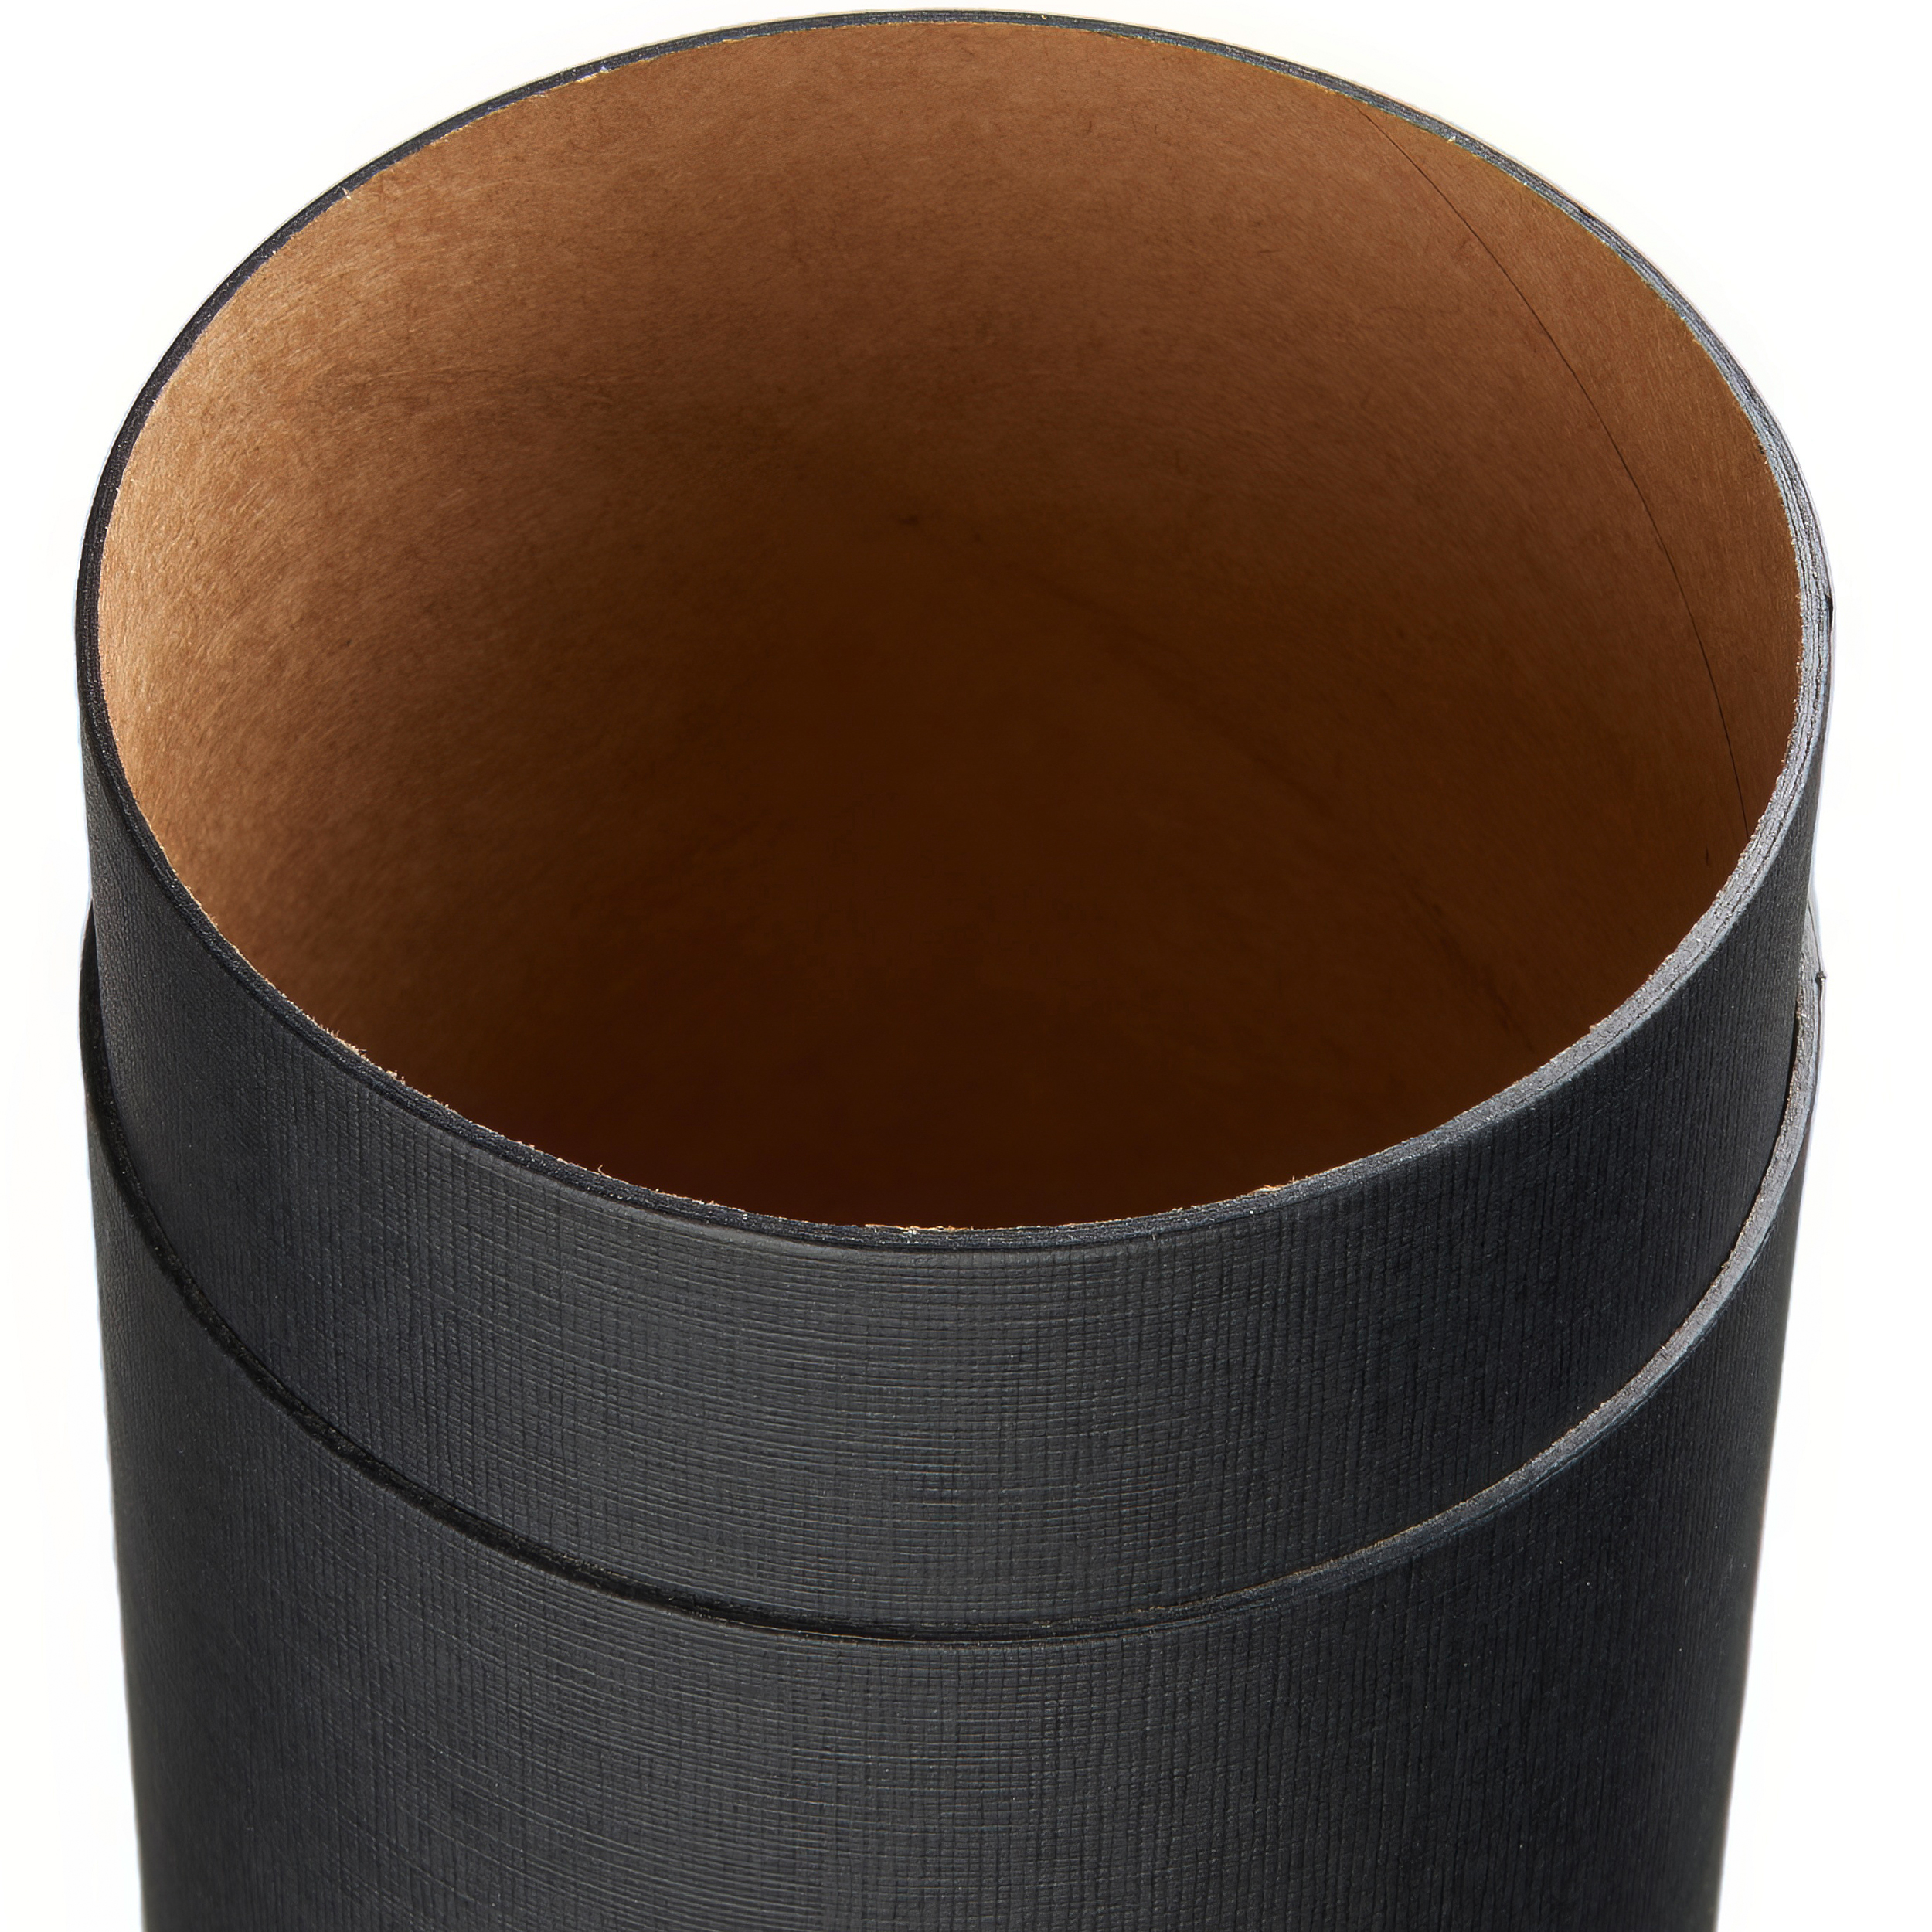 Pappdose schwarz linon | 120 x 45 mm I food grade